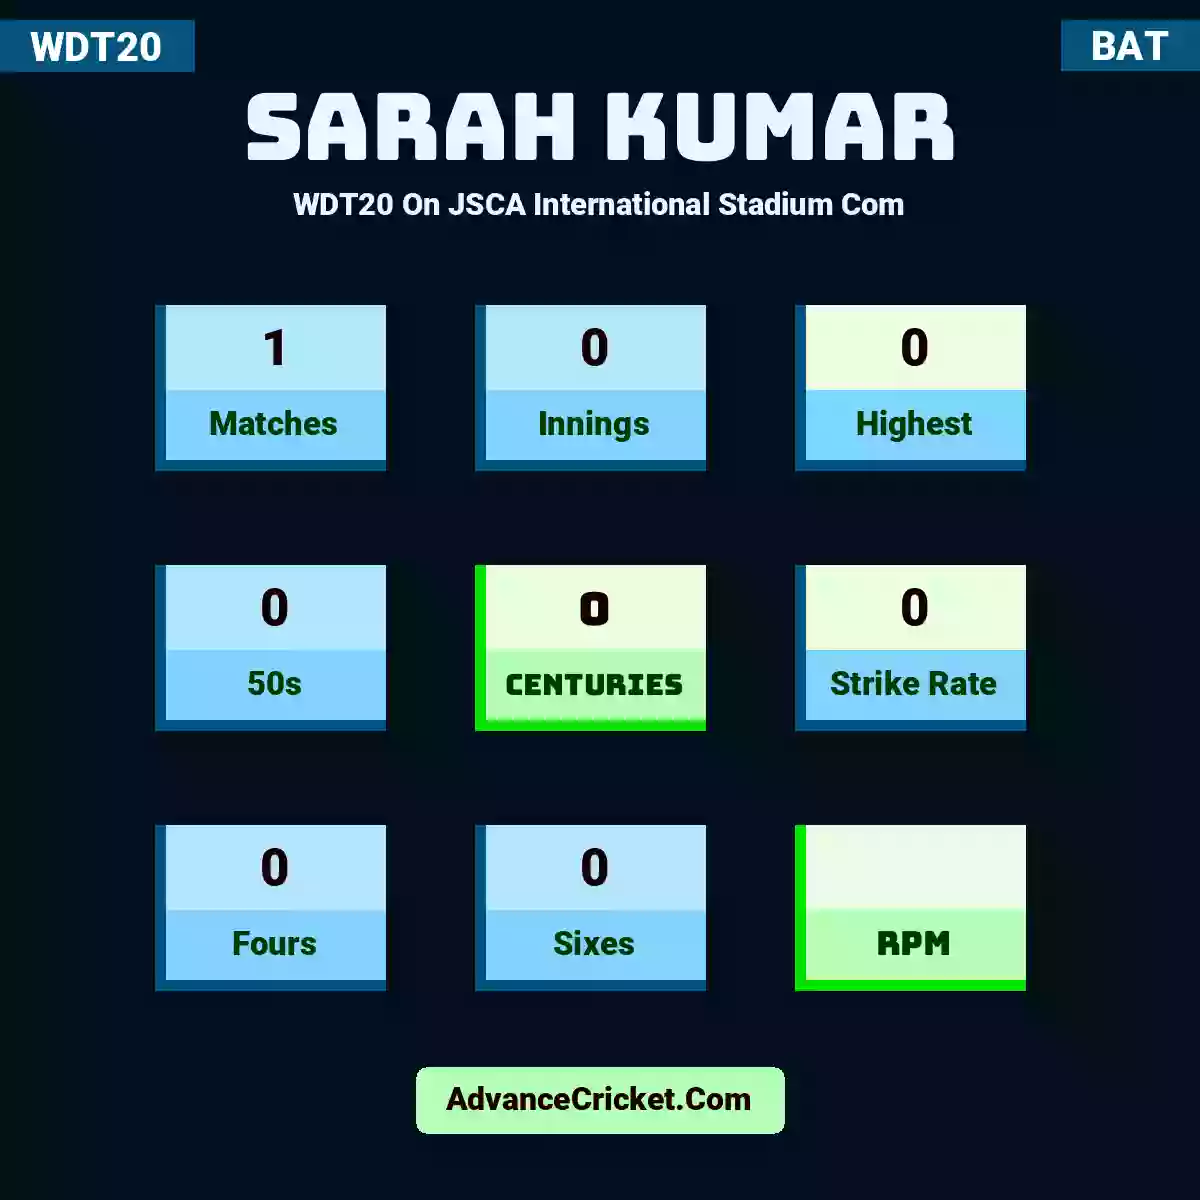 Sarah Kumar WDT20  On JSCA International Stadium Com, Sarah Kumar played 1 matches, scored 0 runs as highest, 0 half-centuries, and 0 centuries, with a strike rate of 0. S.Kumar hit 0 fours and 0 sixes.